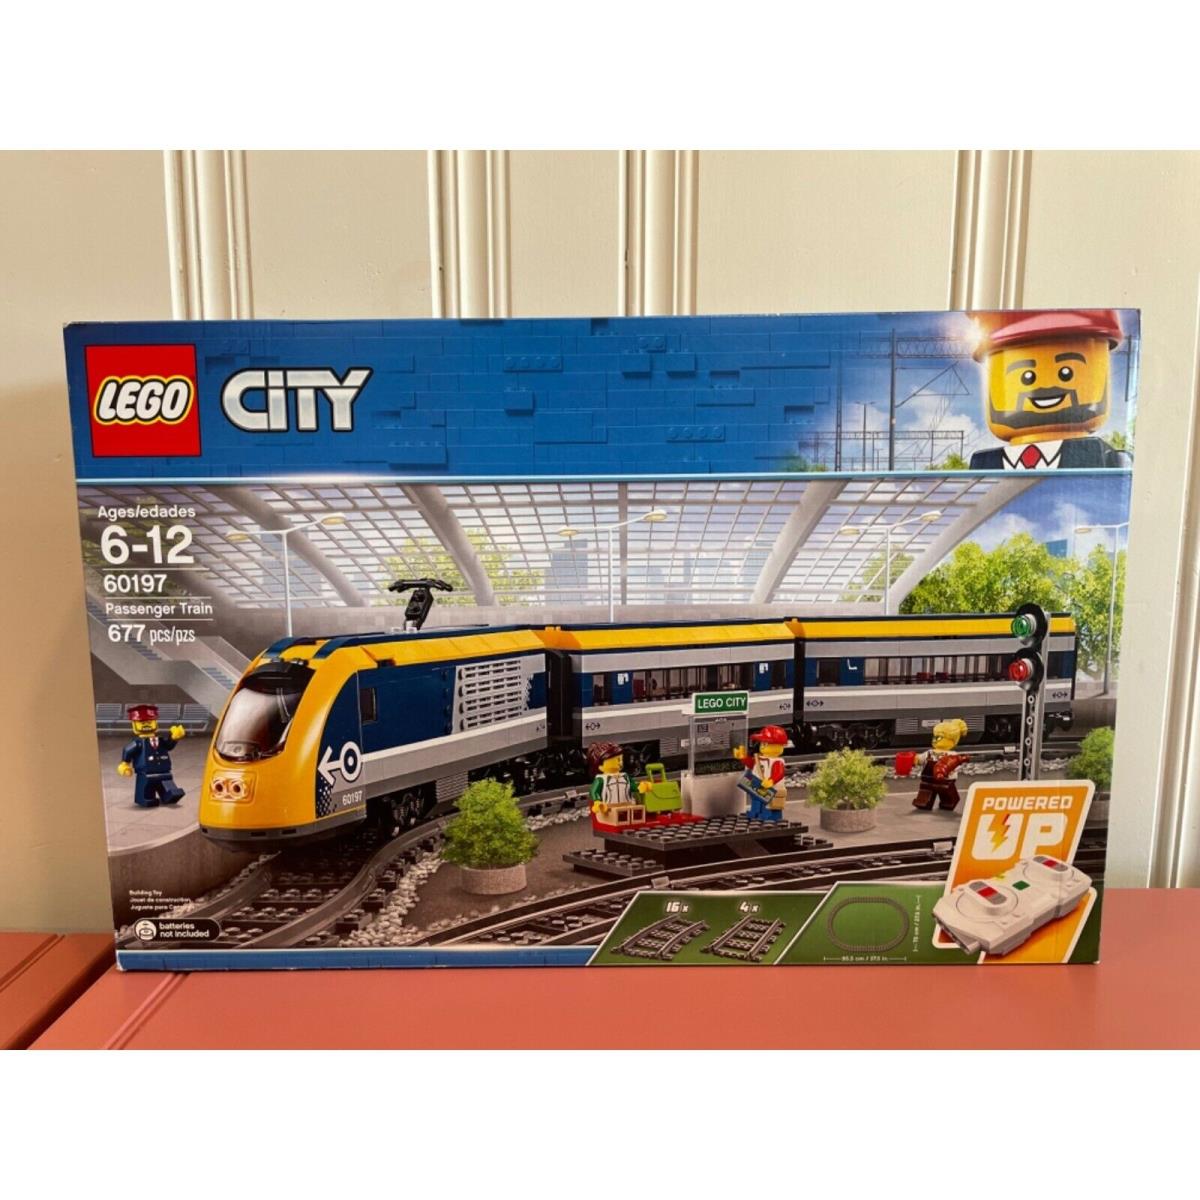 Lego City Passenger Train 60197 Building Kit 677 Pcs Retired Set Playset